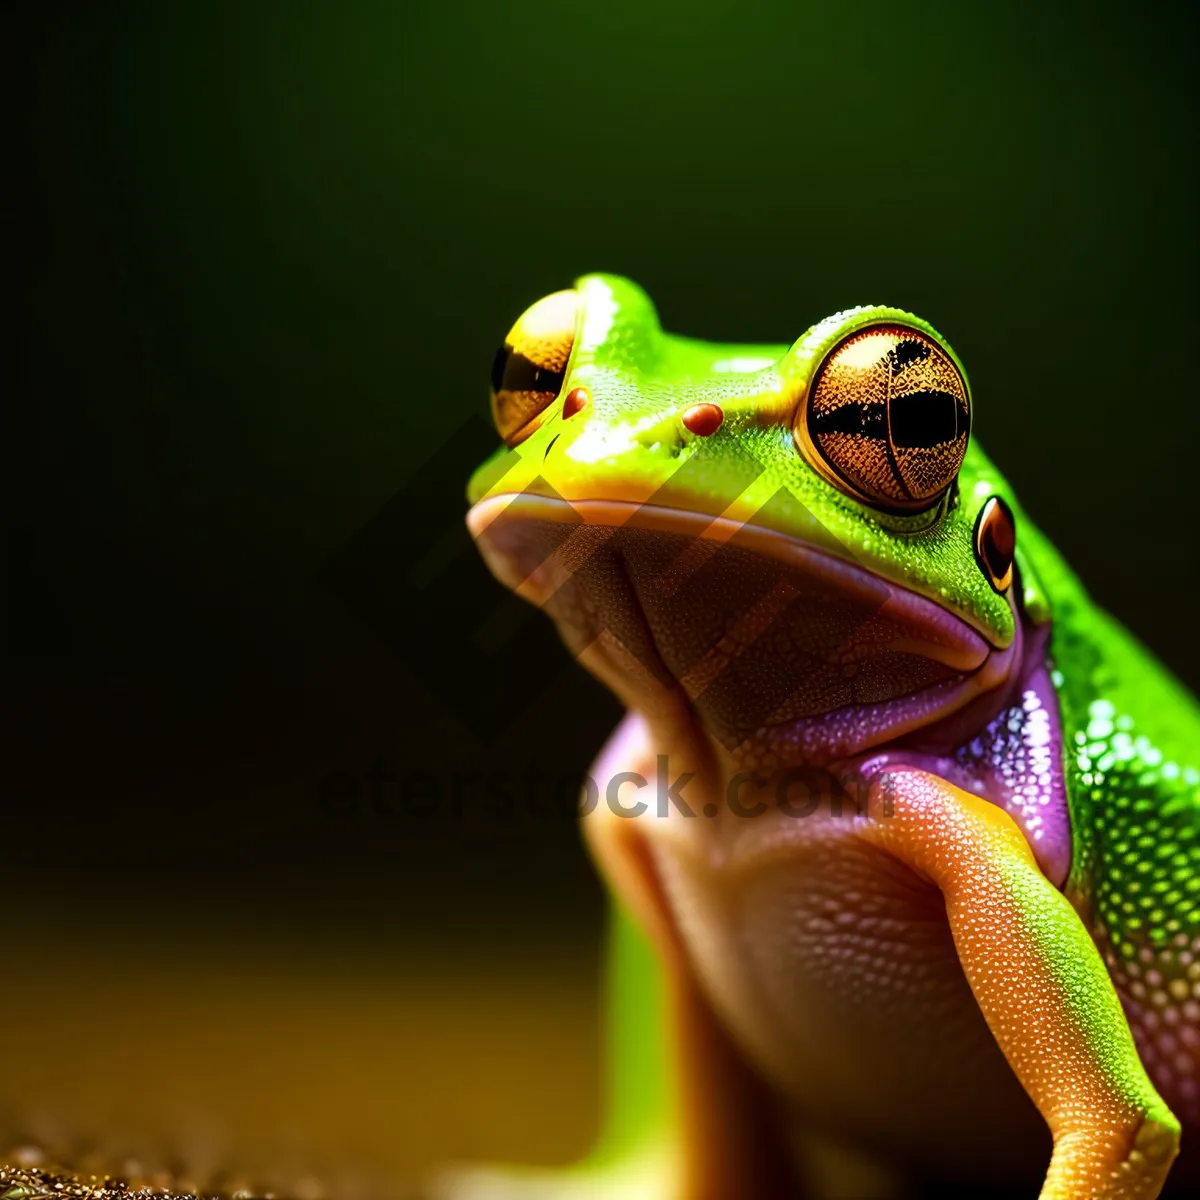 Picture of Eyed Tree Frog with Bulging Orange Eyes